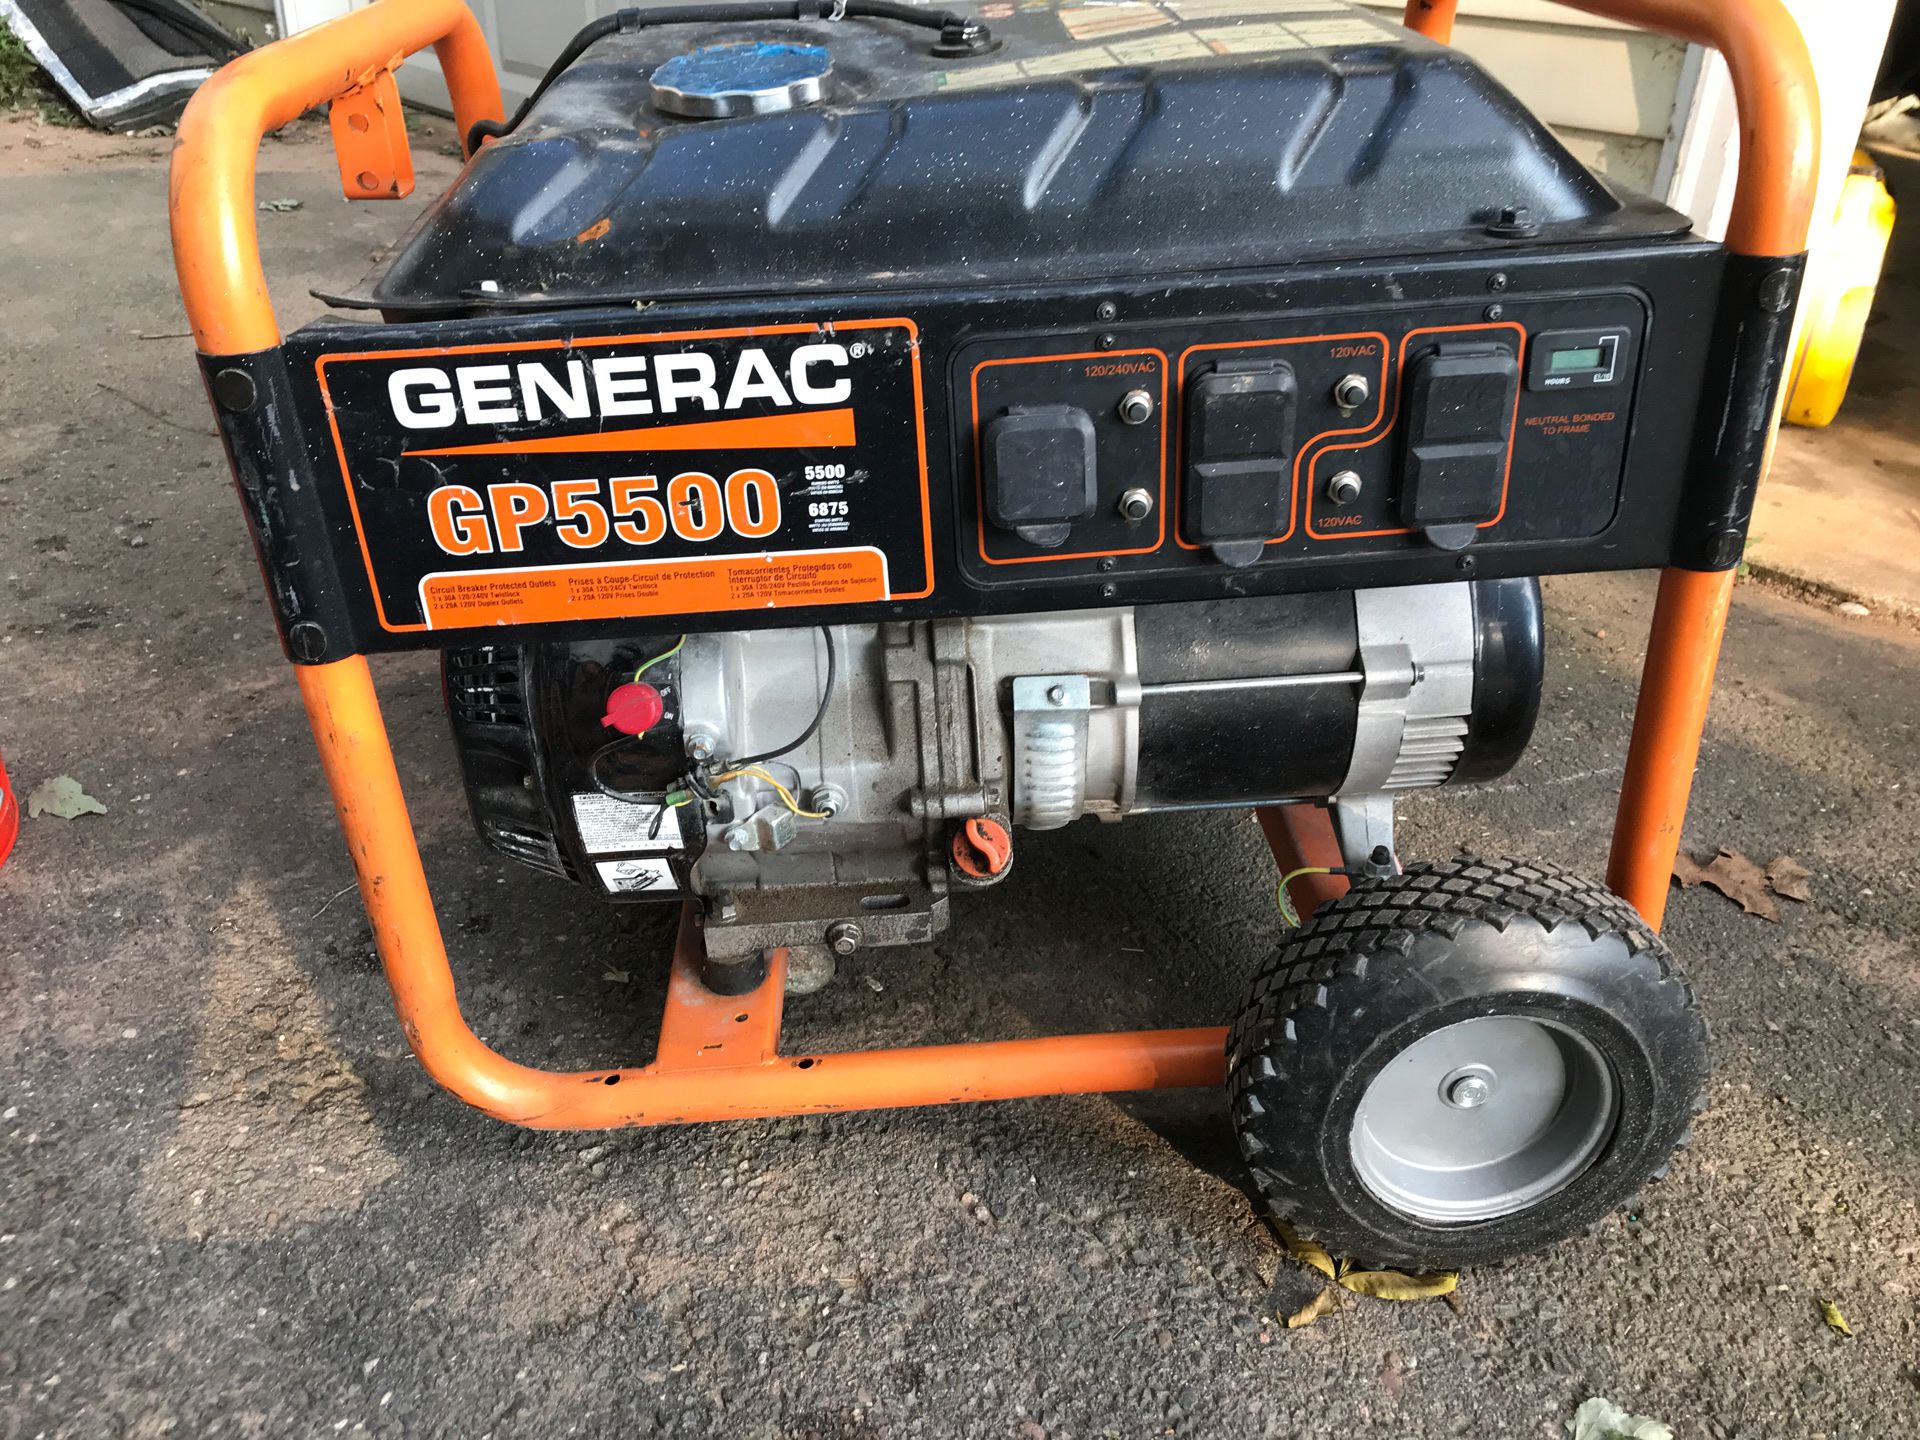 Generac gp5500 generator